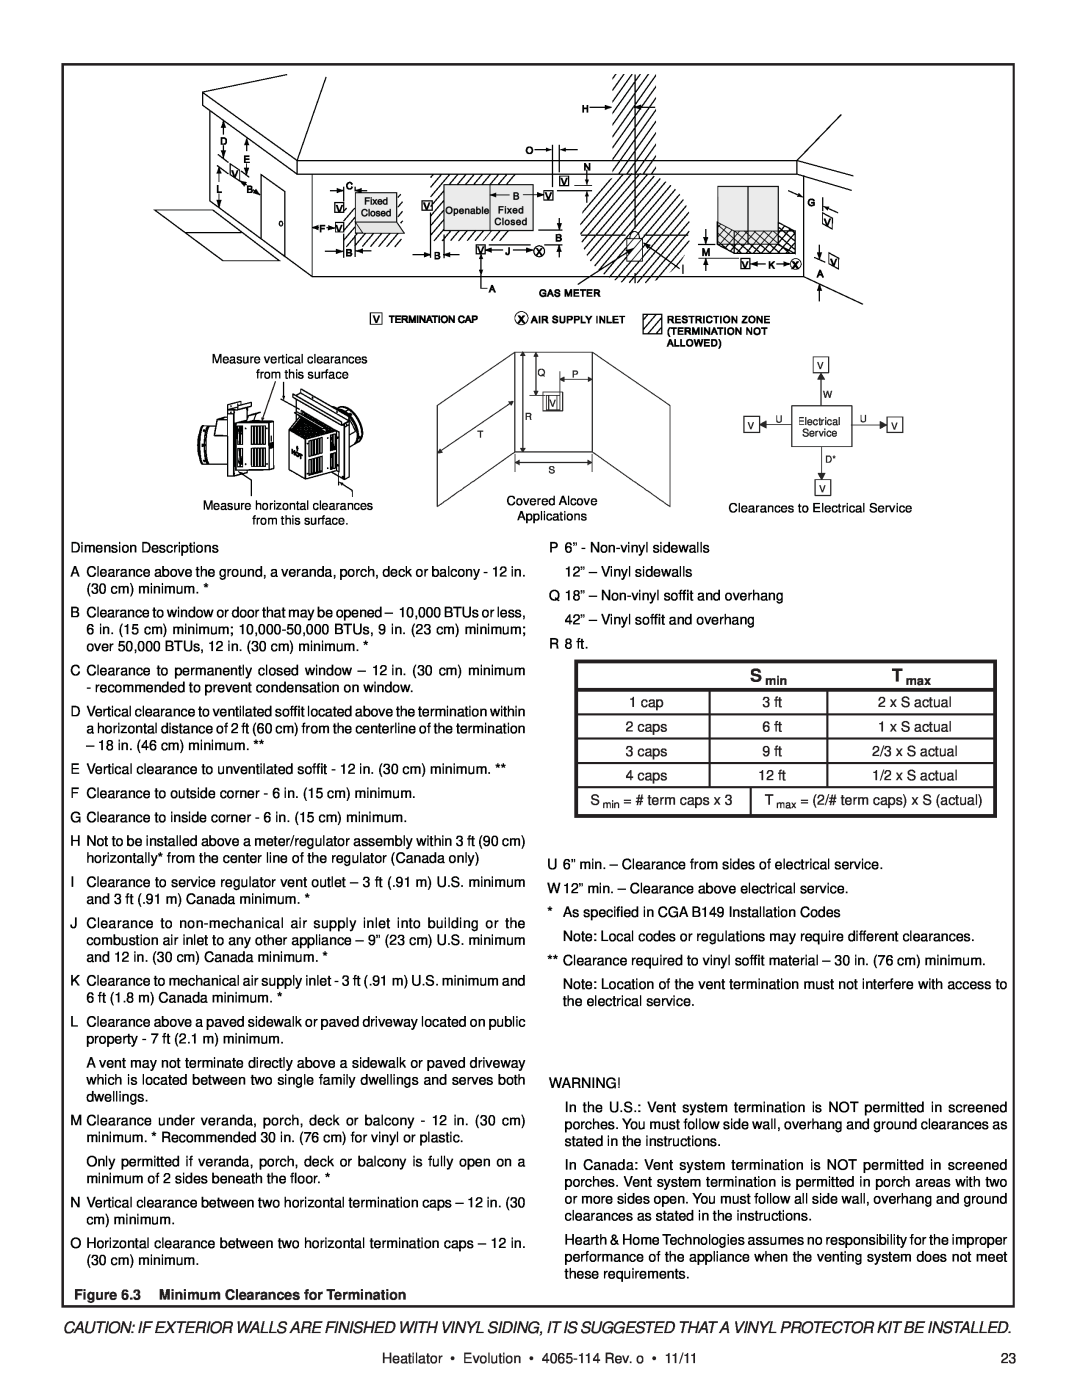 Heatiator NEVO4236I NEVO3630I owner manual 3 Minimum Clearances for Termination, S min = # term caps x 